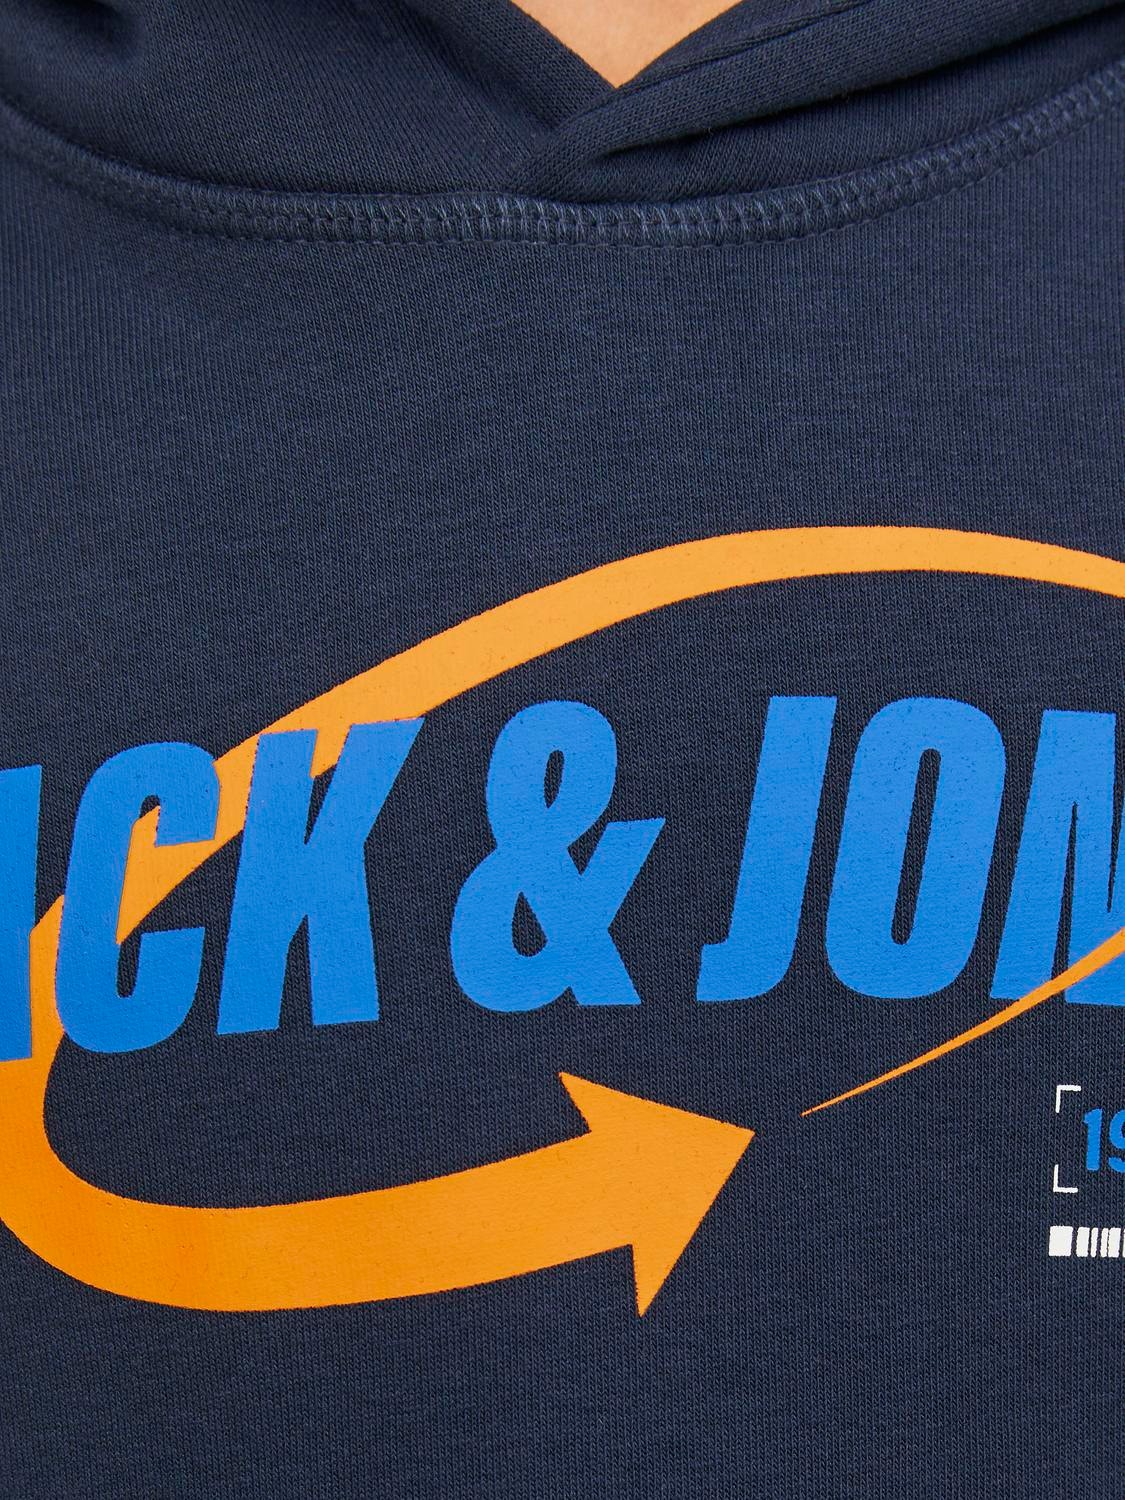 Jack & Jones Logo Kapuzenpullover Für jungs -Navy Blazer - 12247700